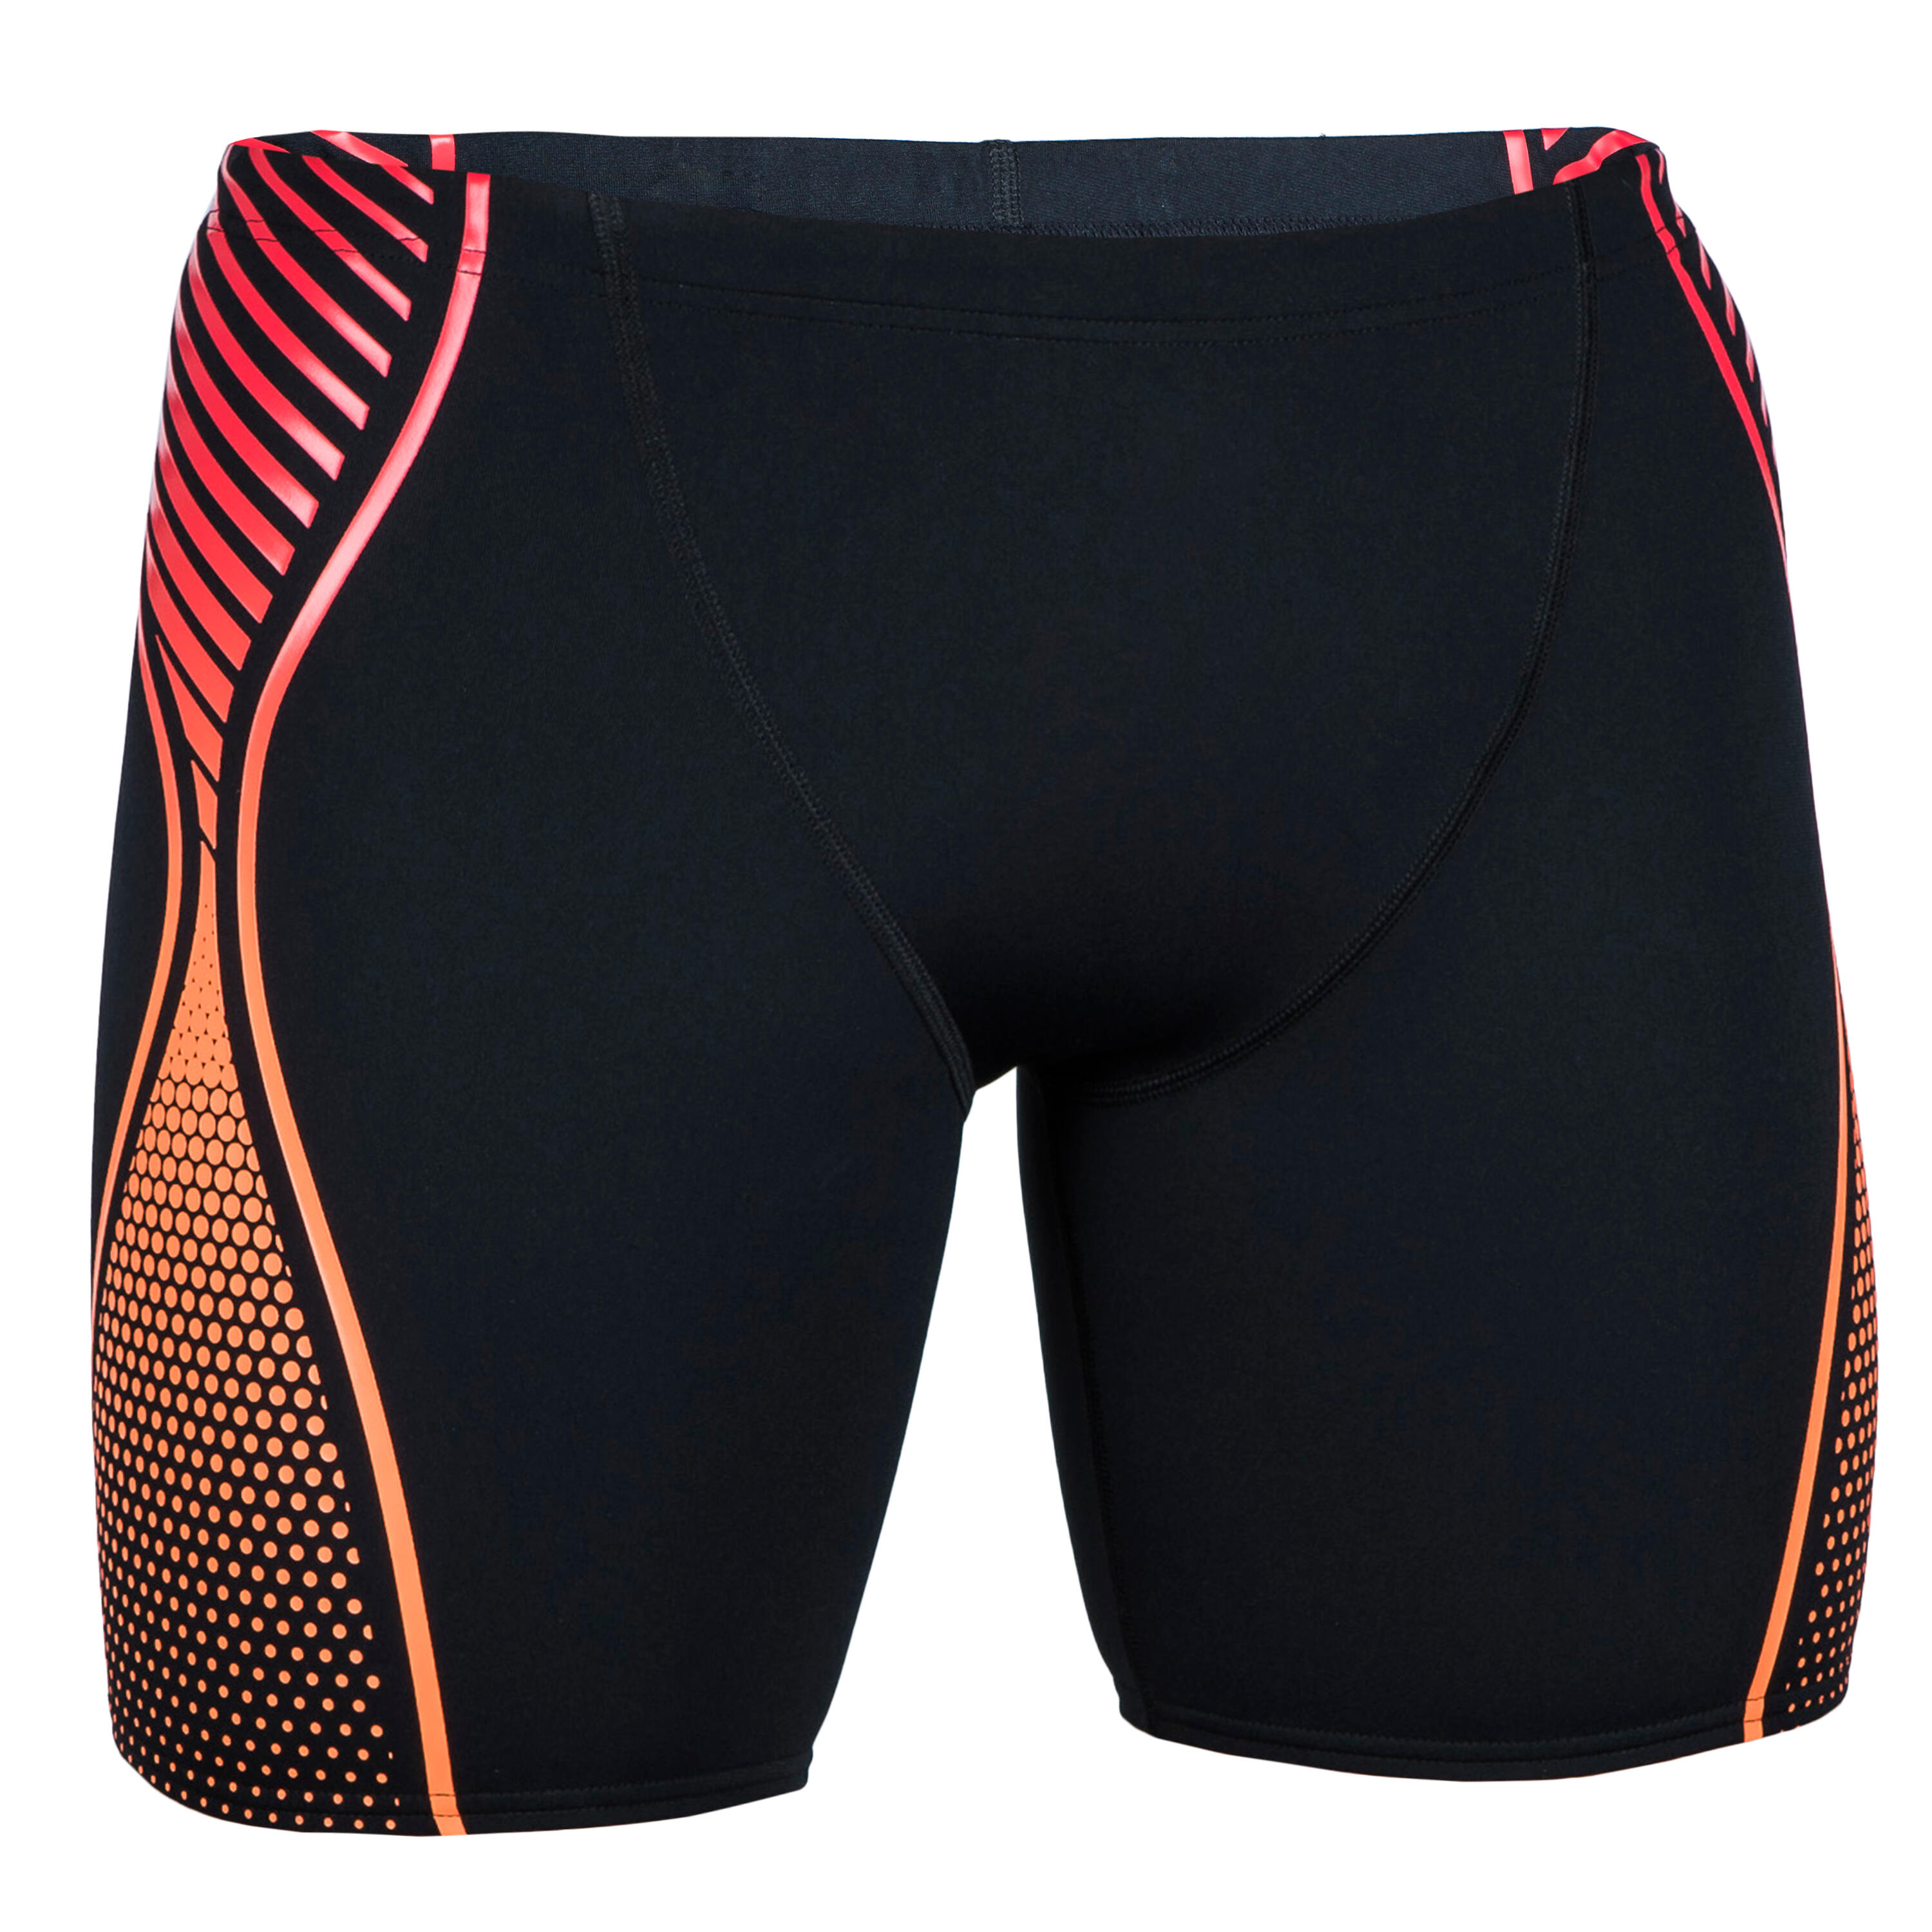 Men’s Swimming Boxers Speedo - Black Orange Red 2/5